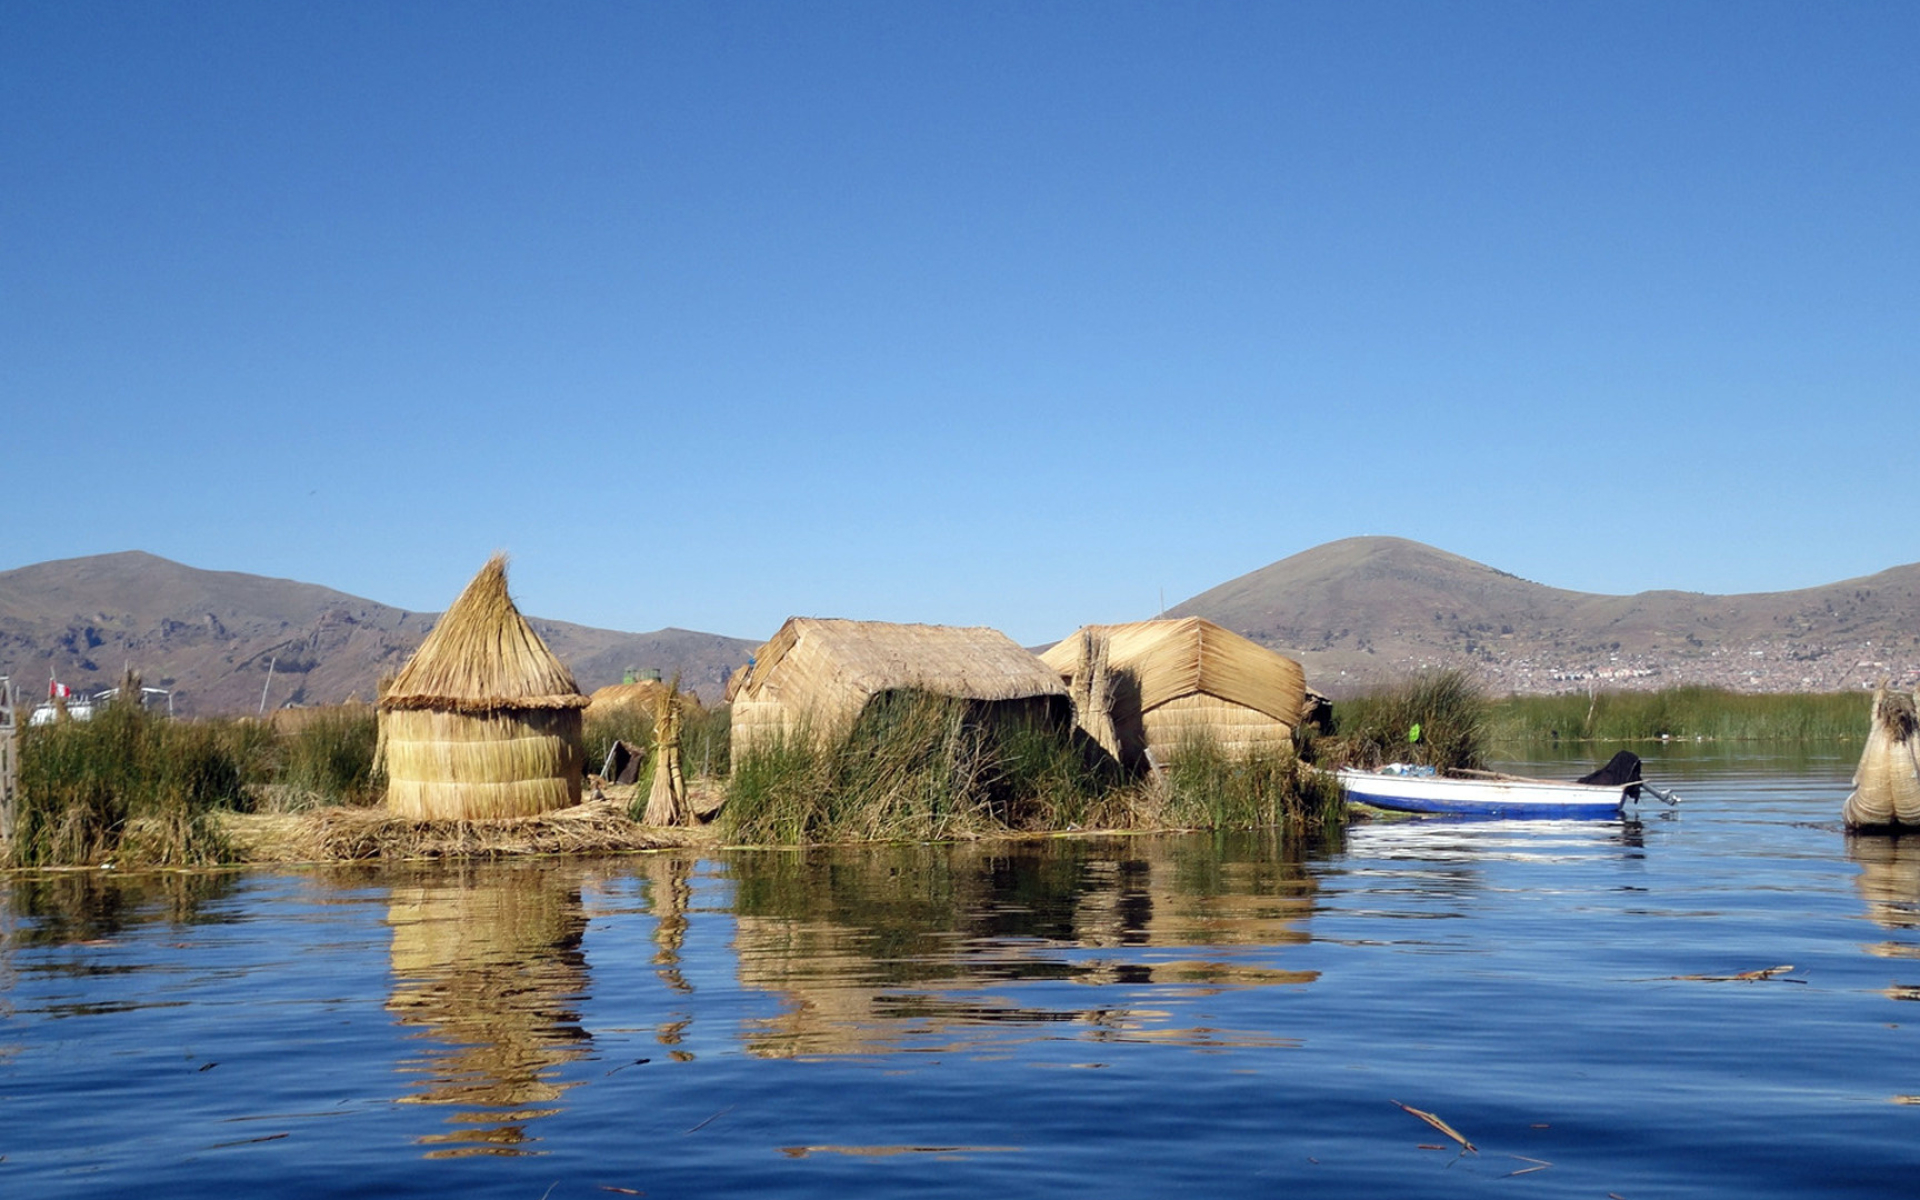 Lake Titicaca wallpaper, World wallpapers, Exquisite scene, Tranquil beauty, 1920x1200 HD Desktop